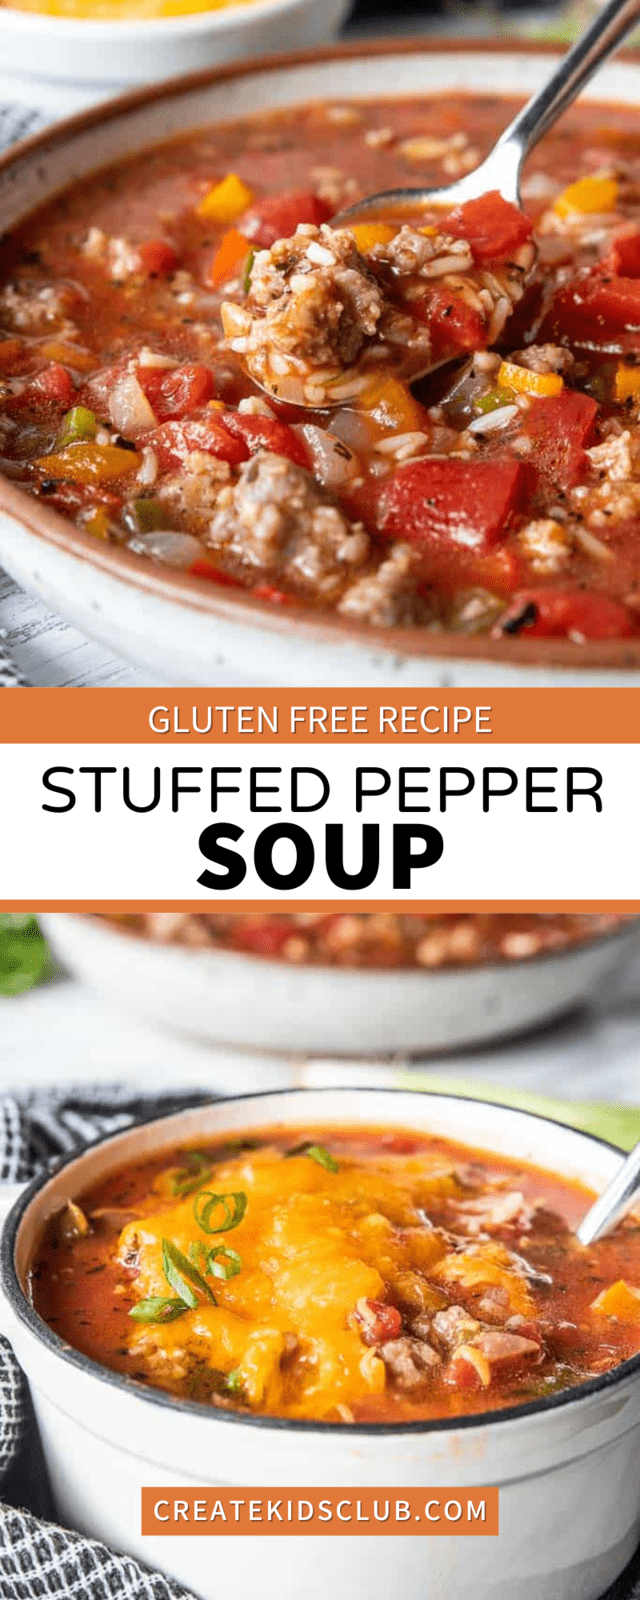 Pinterest image of stuffed pepper soup